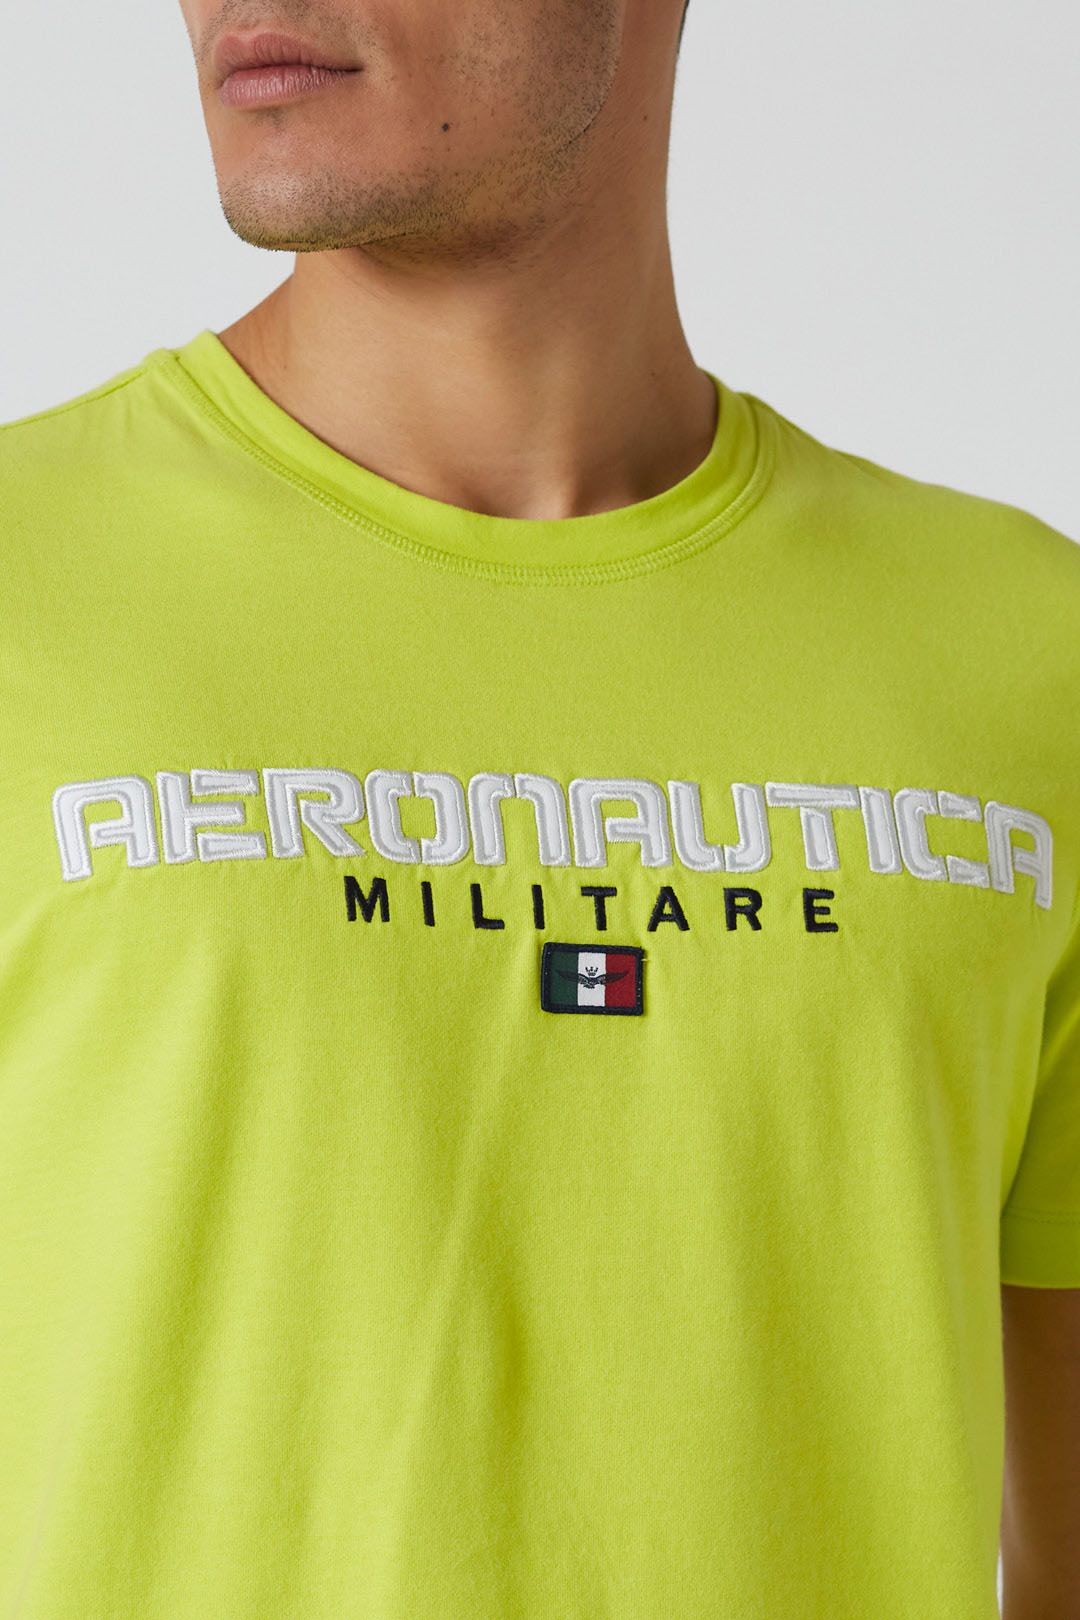 T-Shirt Aeronautica Militare Uomo 231TS2064J602 - Vella Group